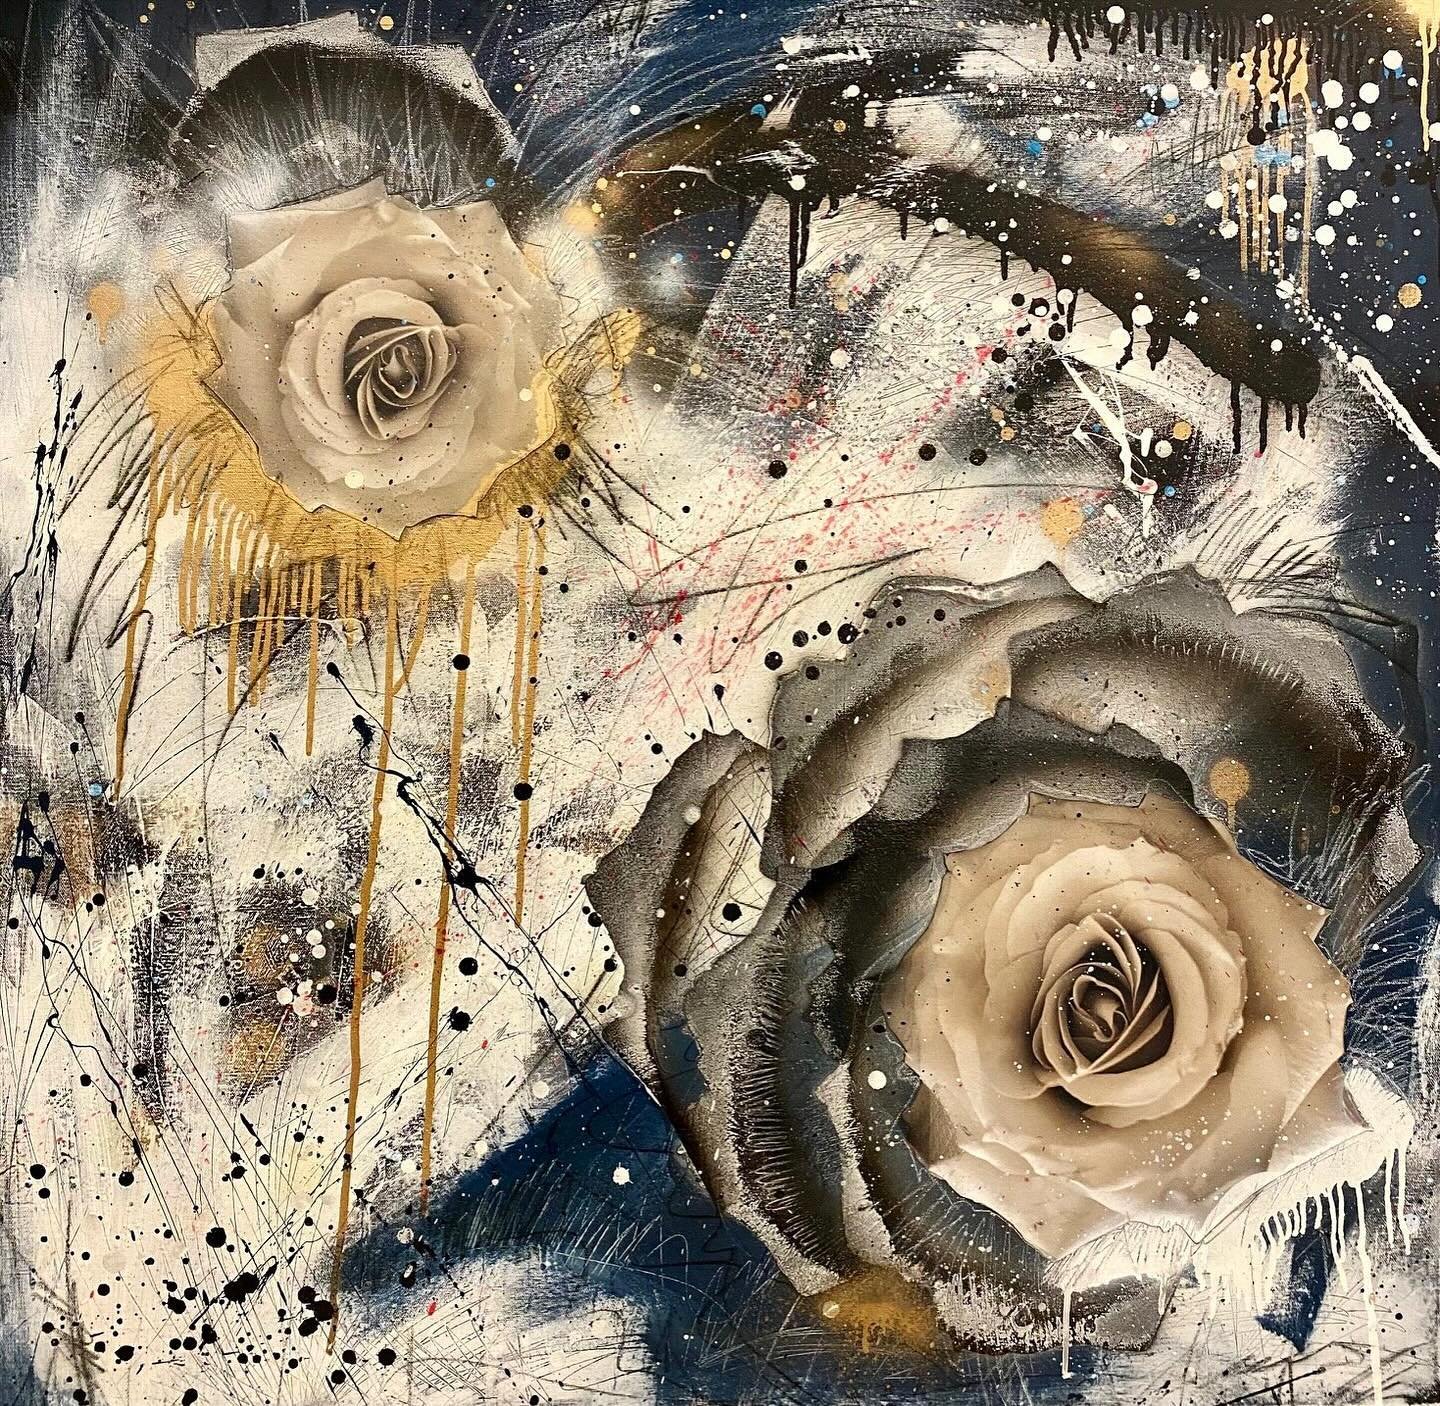 &ldquo;Golden Rose&rdquo; for golden days&hellip; #MirrorballGallery 

Mixed-media, acrylic on canvas, spray paints, photography, gold dust, resin. 36x36x2.5

#art #artistsoninstagram #artgallery #artist #painting #mixedmedia #floral #rose #contempor